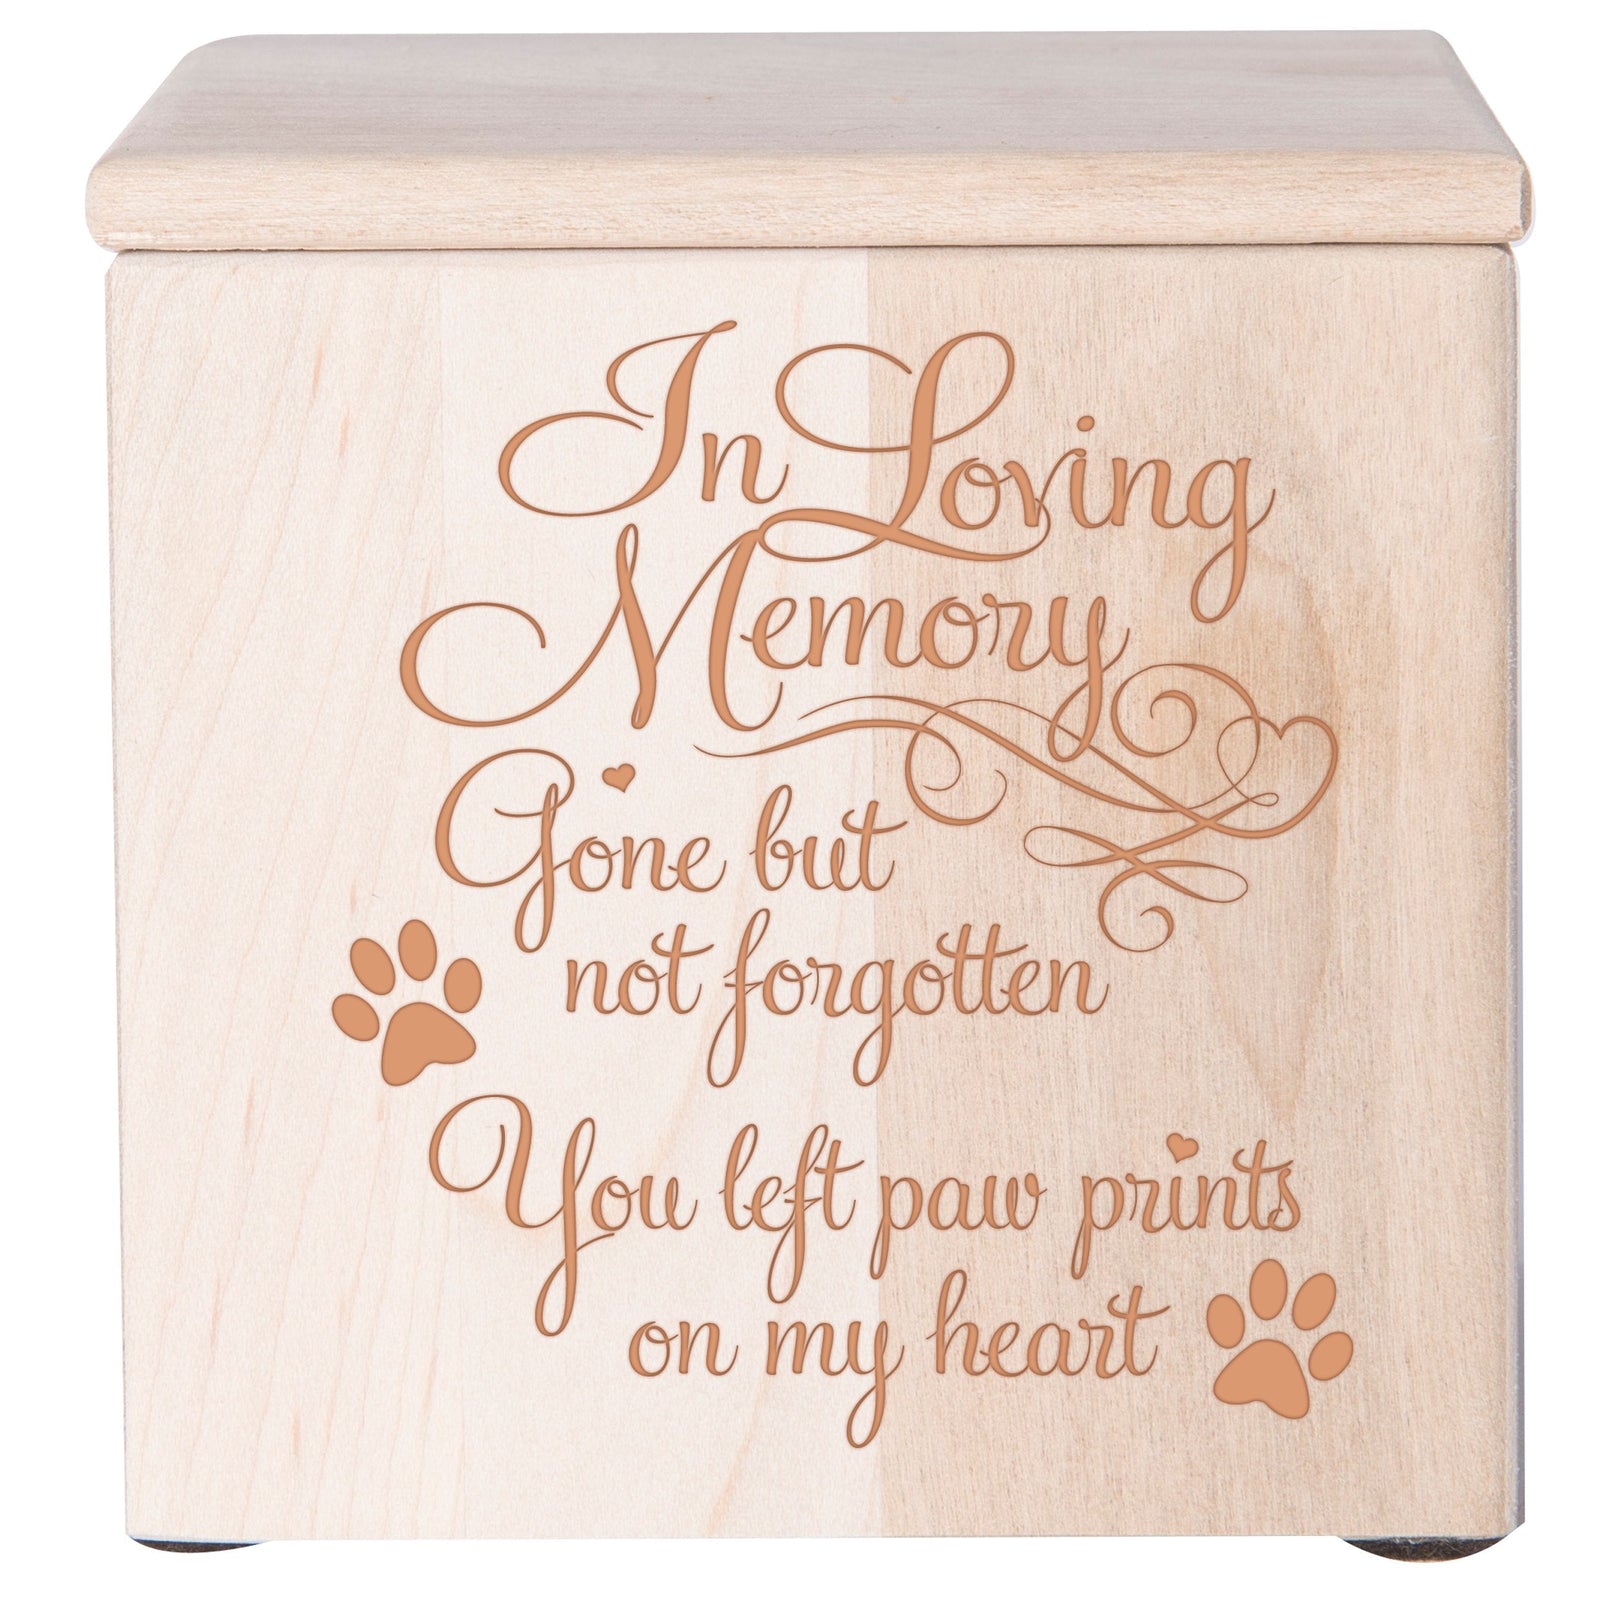 Maple Pet Memorial 3.5x3.5 Keepsake Urn with phrase "Gone But Not Forgotten"